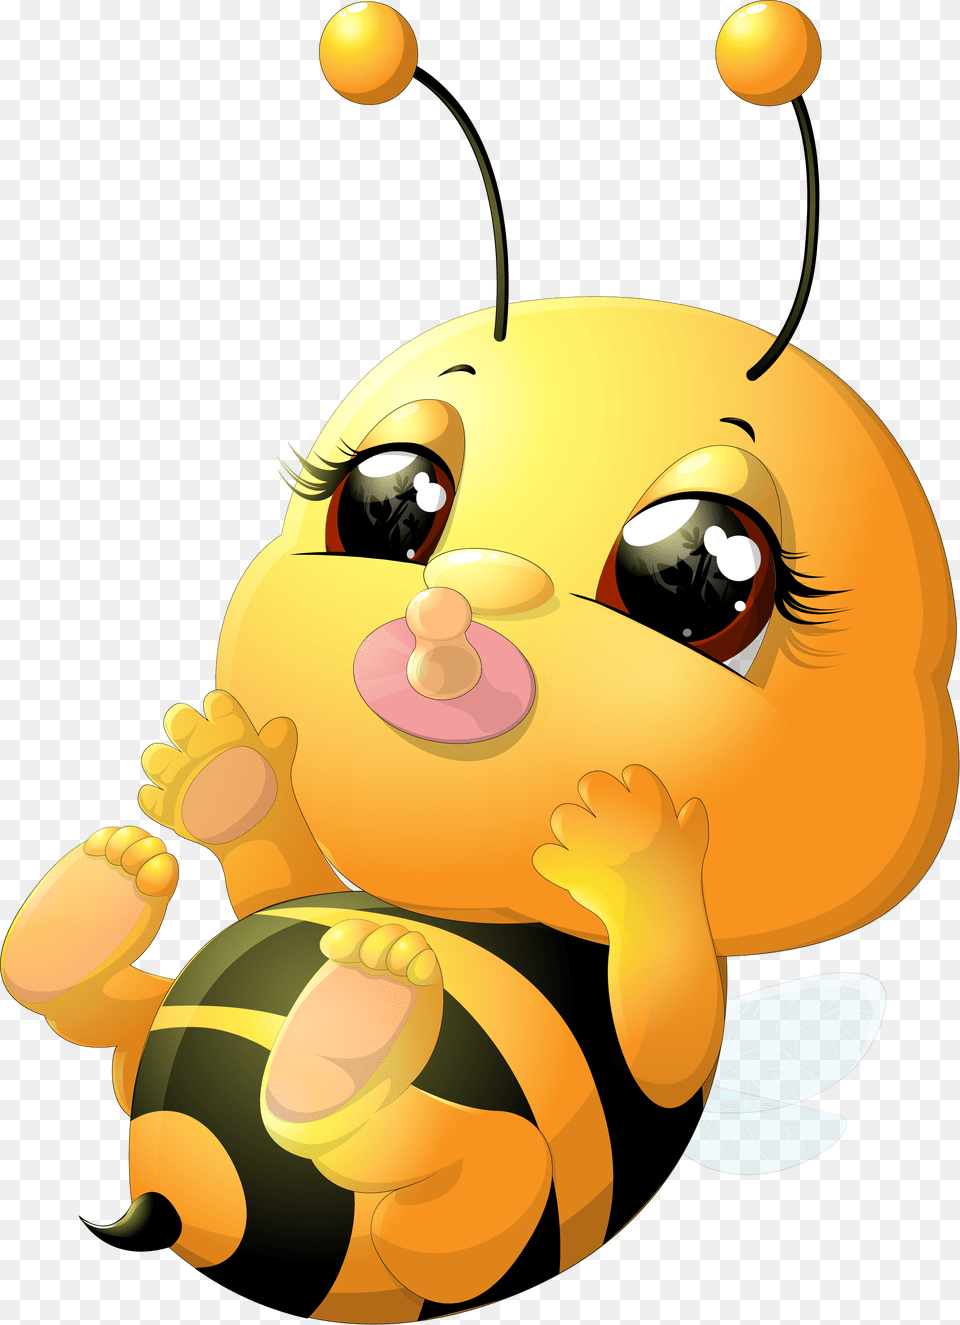 Beehive Honey Bee Transprent Baby Bee Cartoon, Ammunition, Grenade, Weapon Png